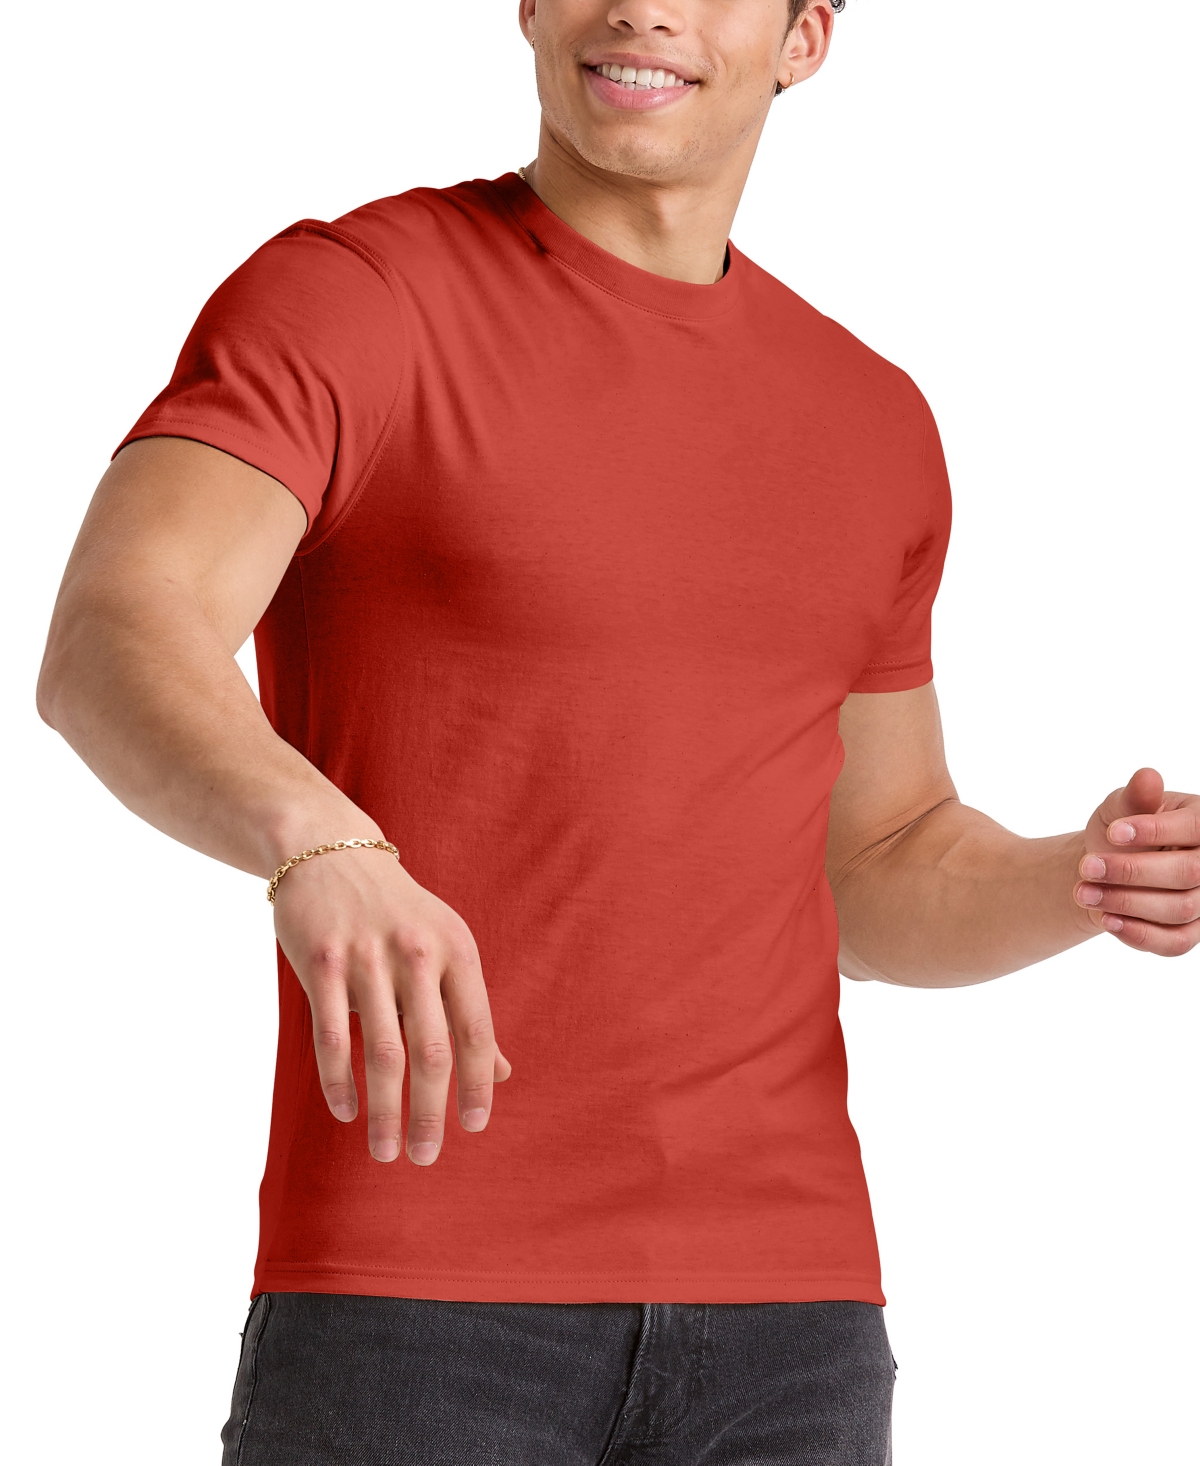 Men's Hanes Originals Cotton Short Sleeve T-shirt - Trekking Gray